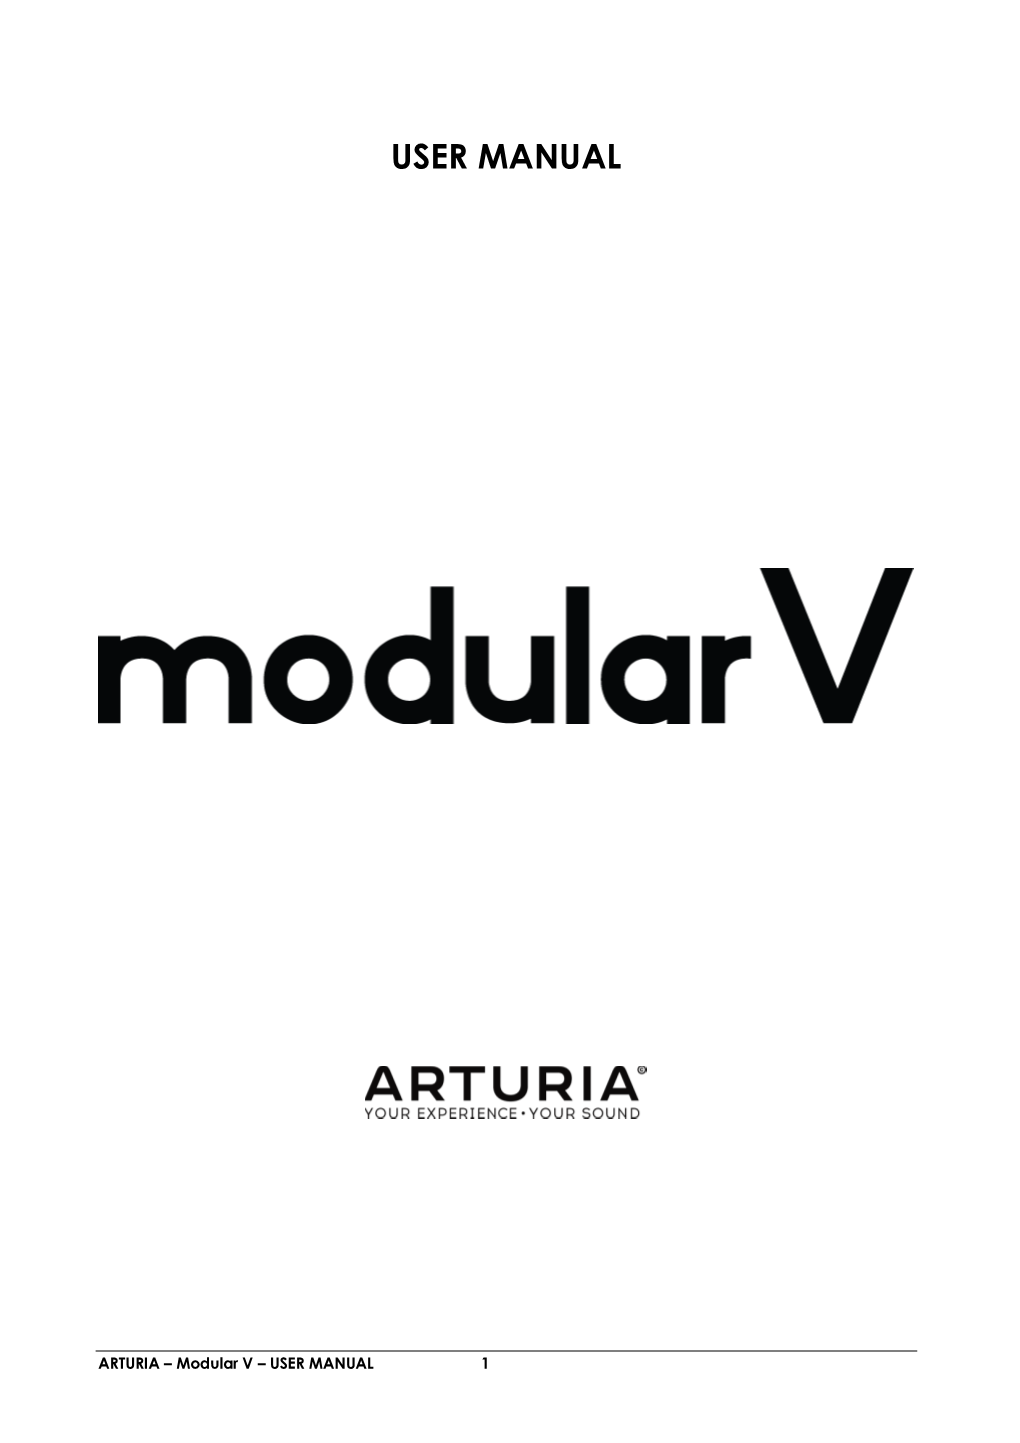 User Manual Modular V